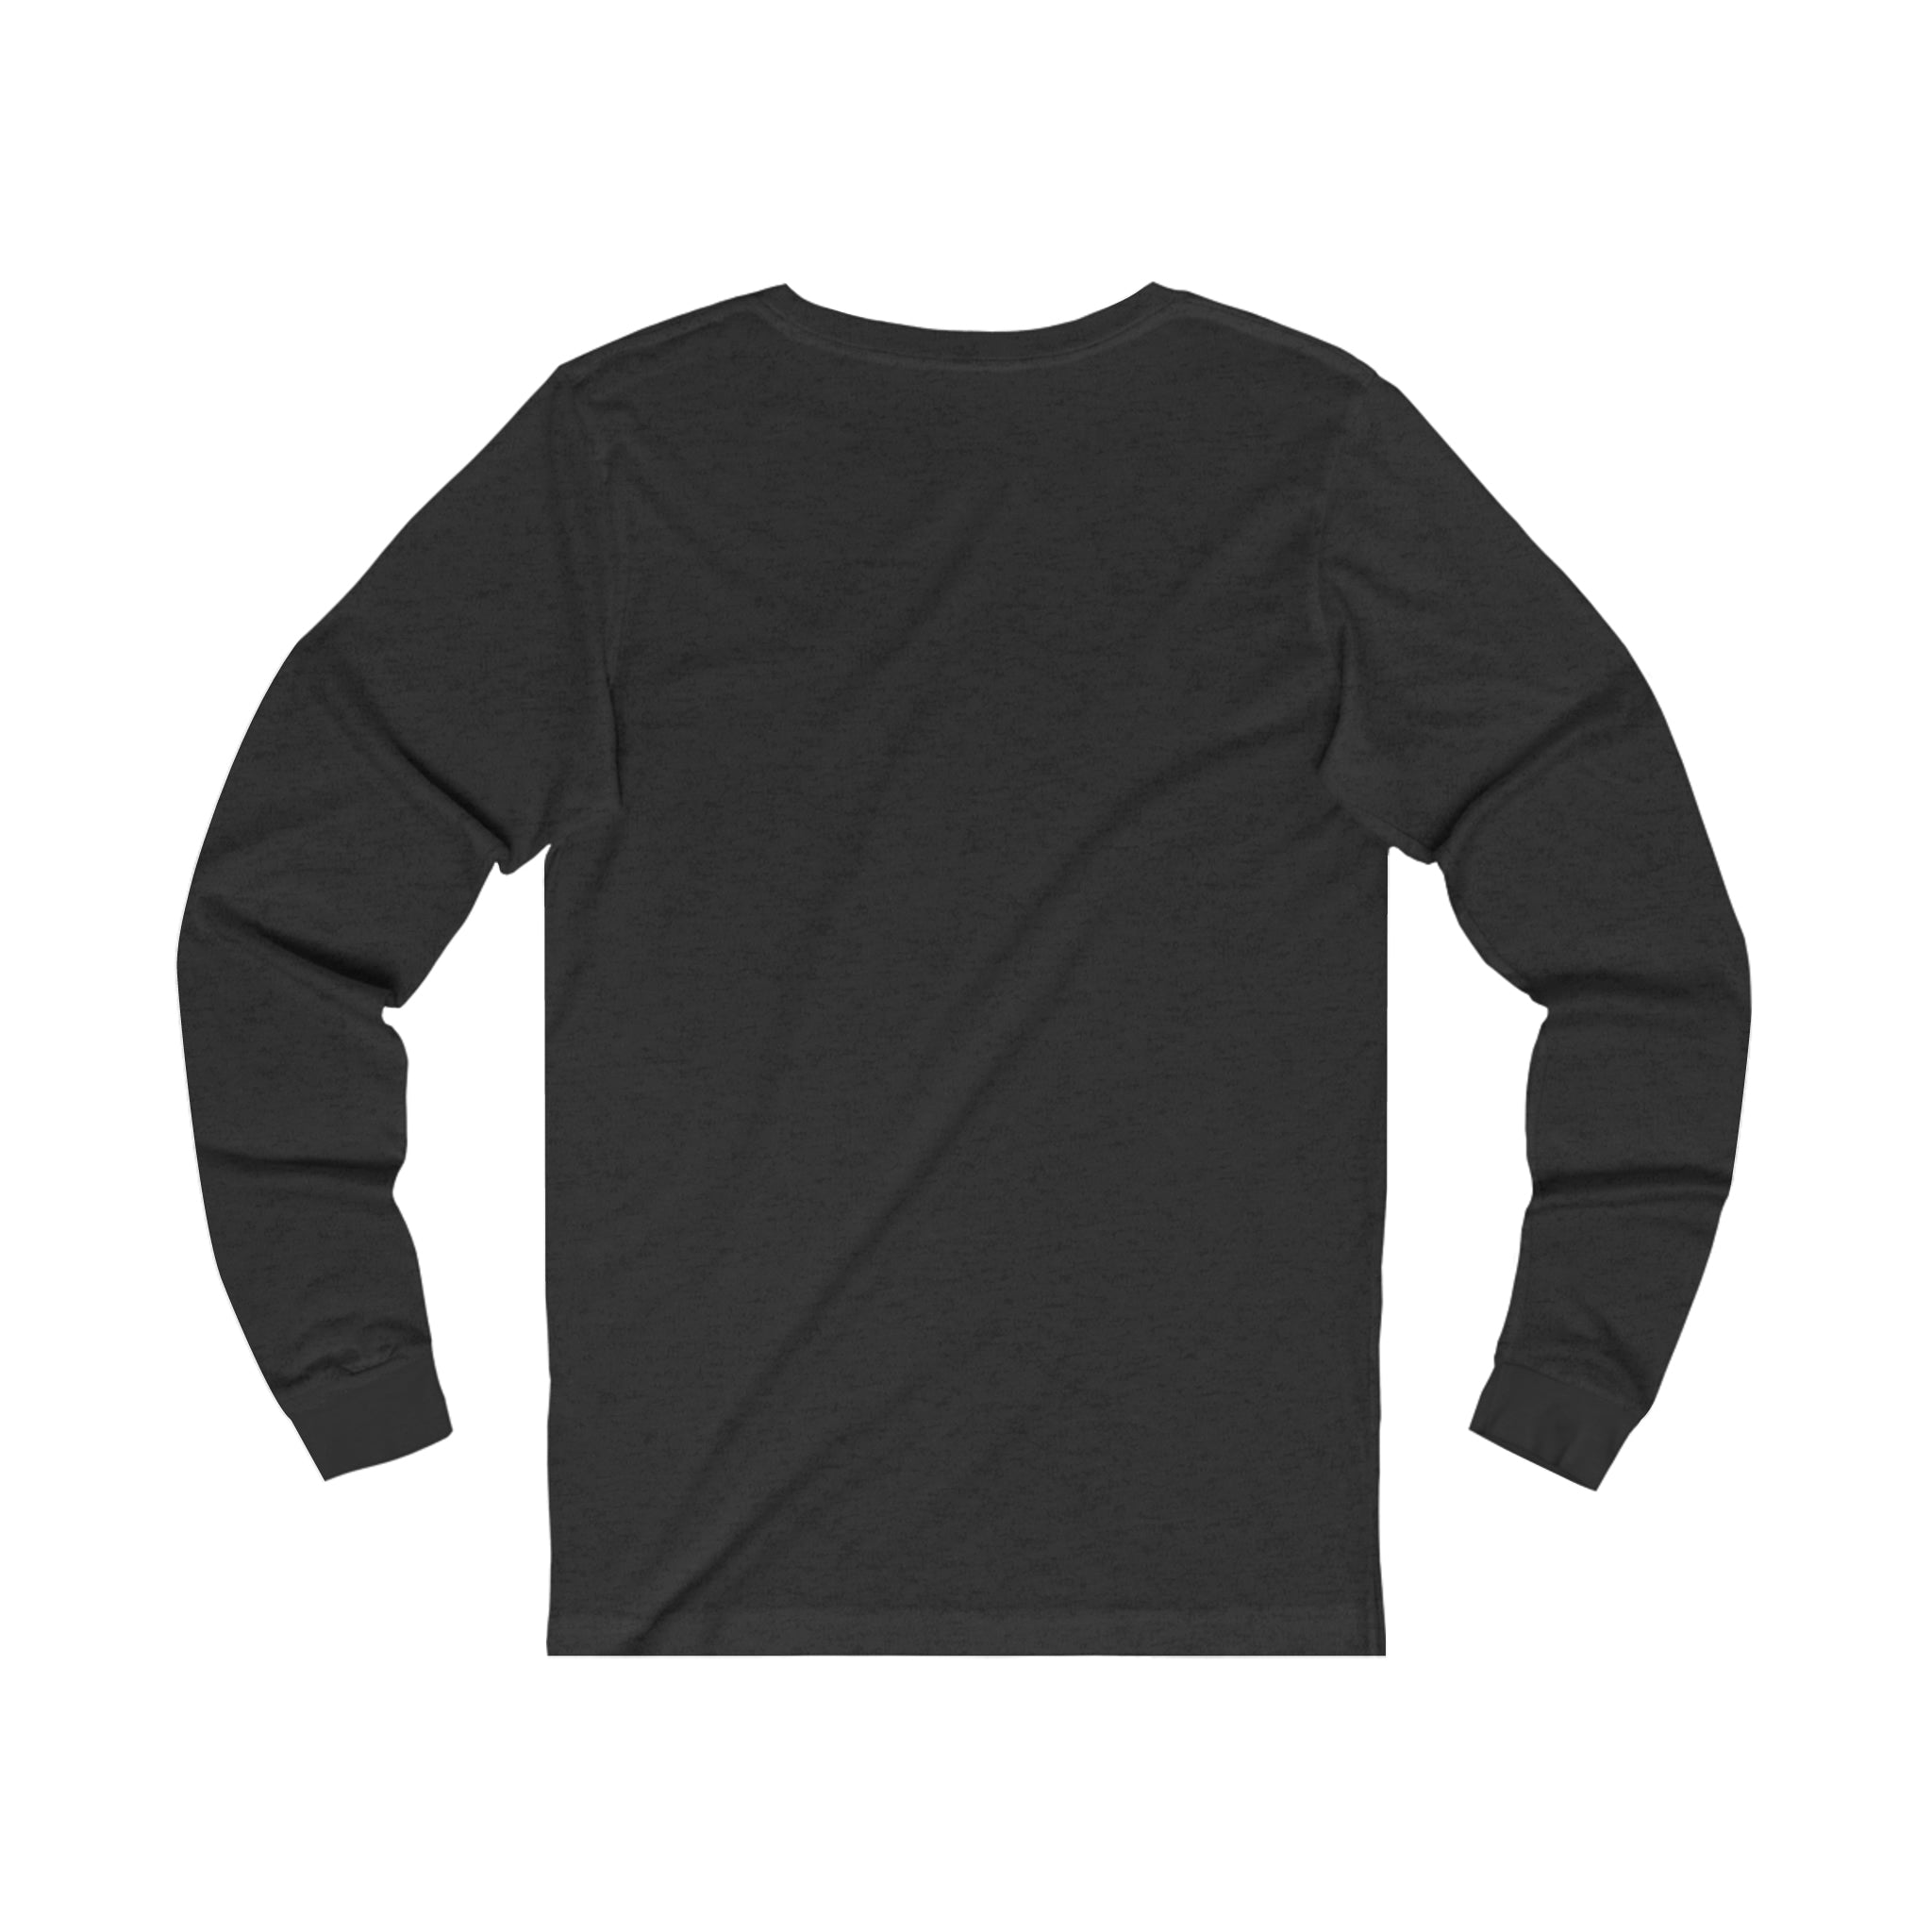 Kali Long Sleeve Shirt